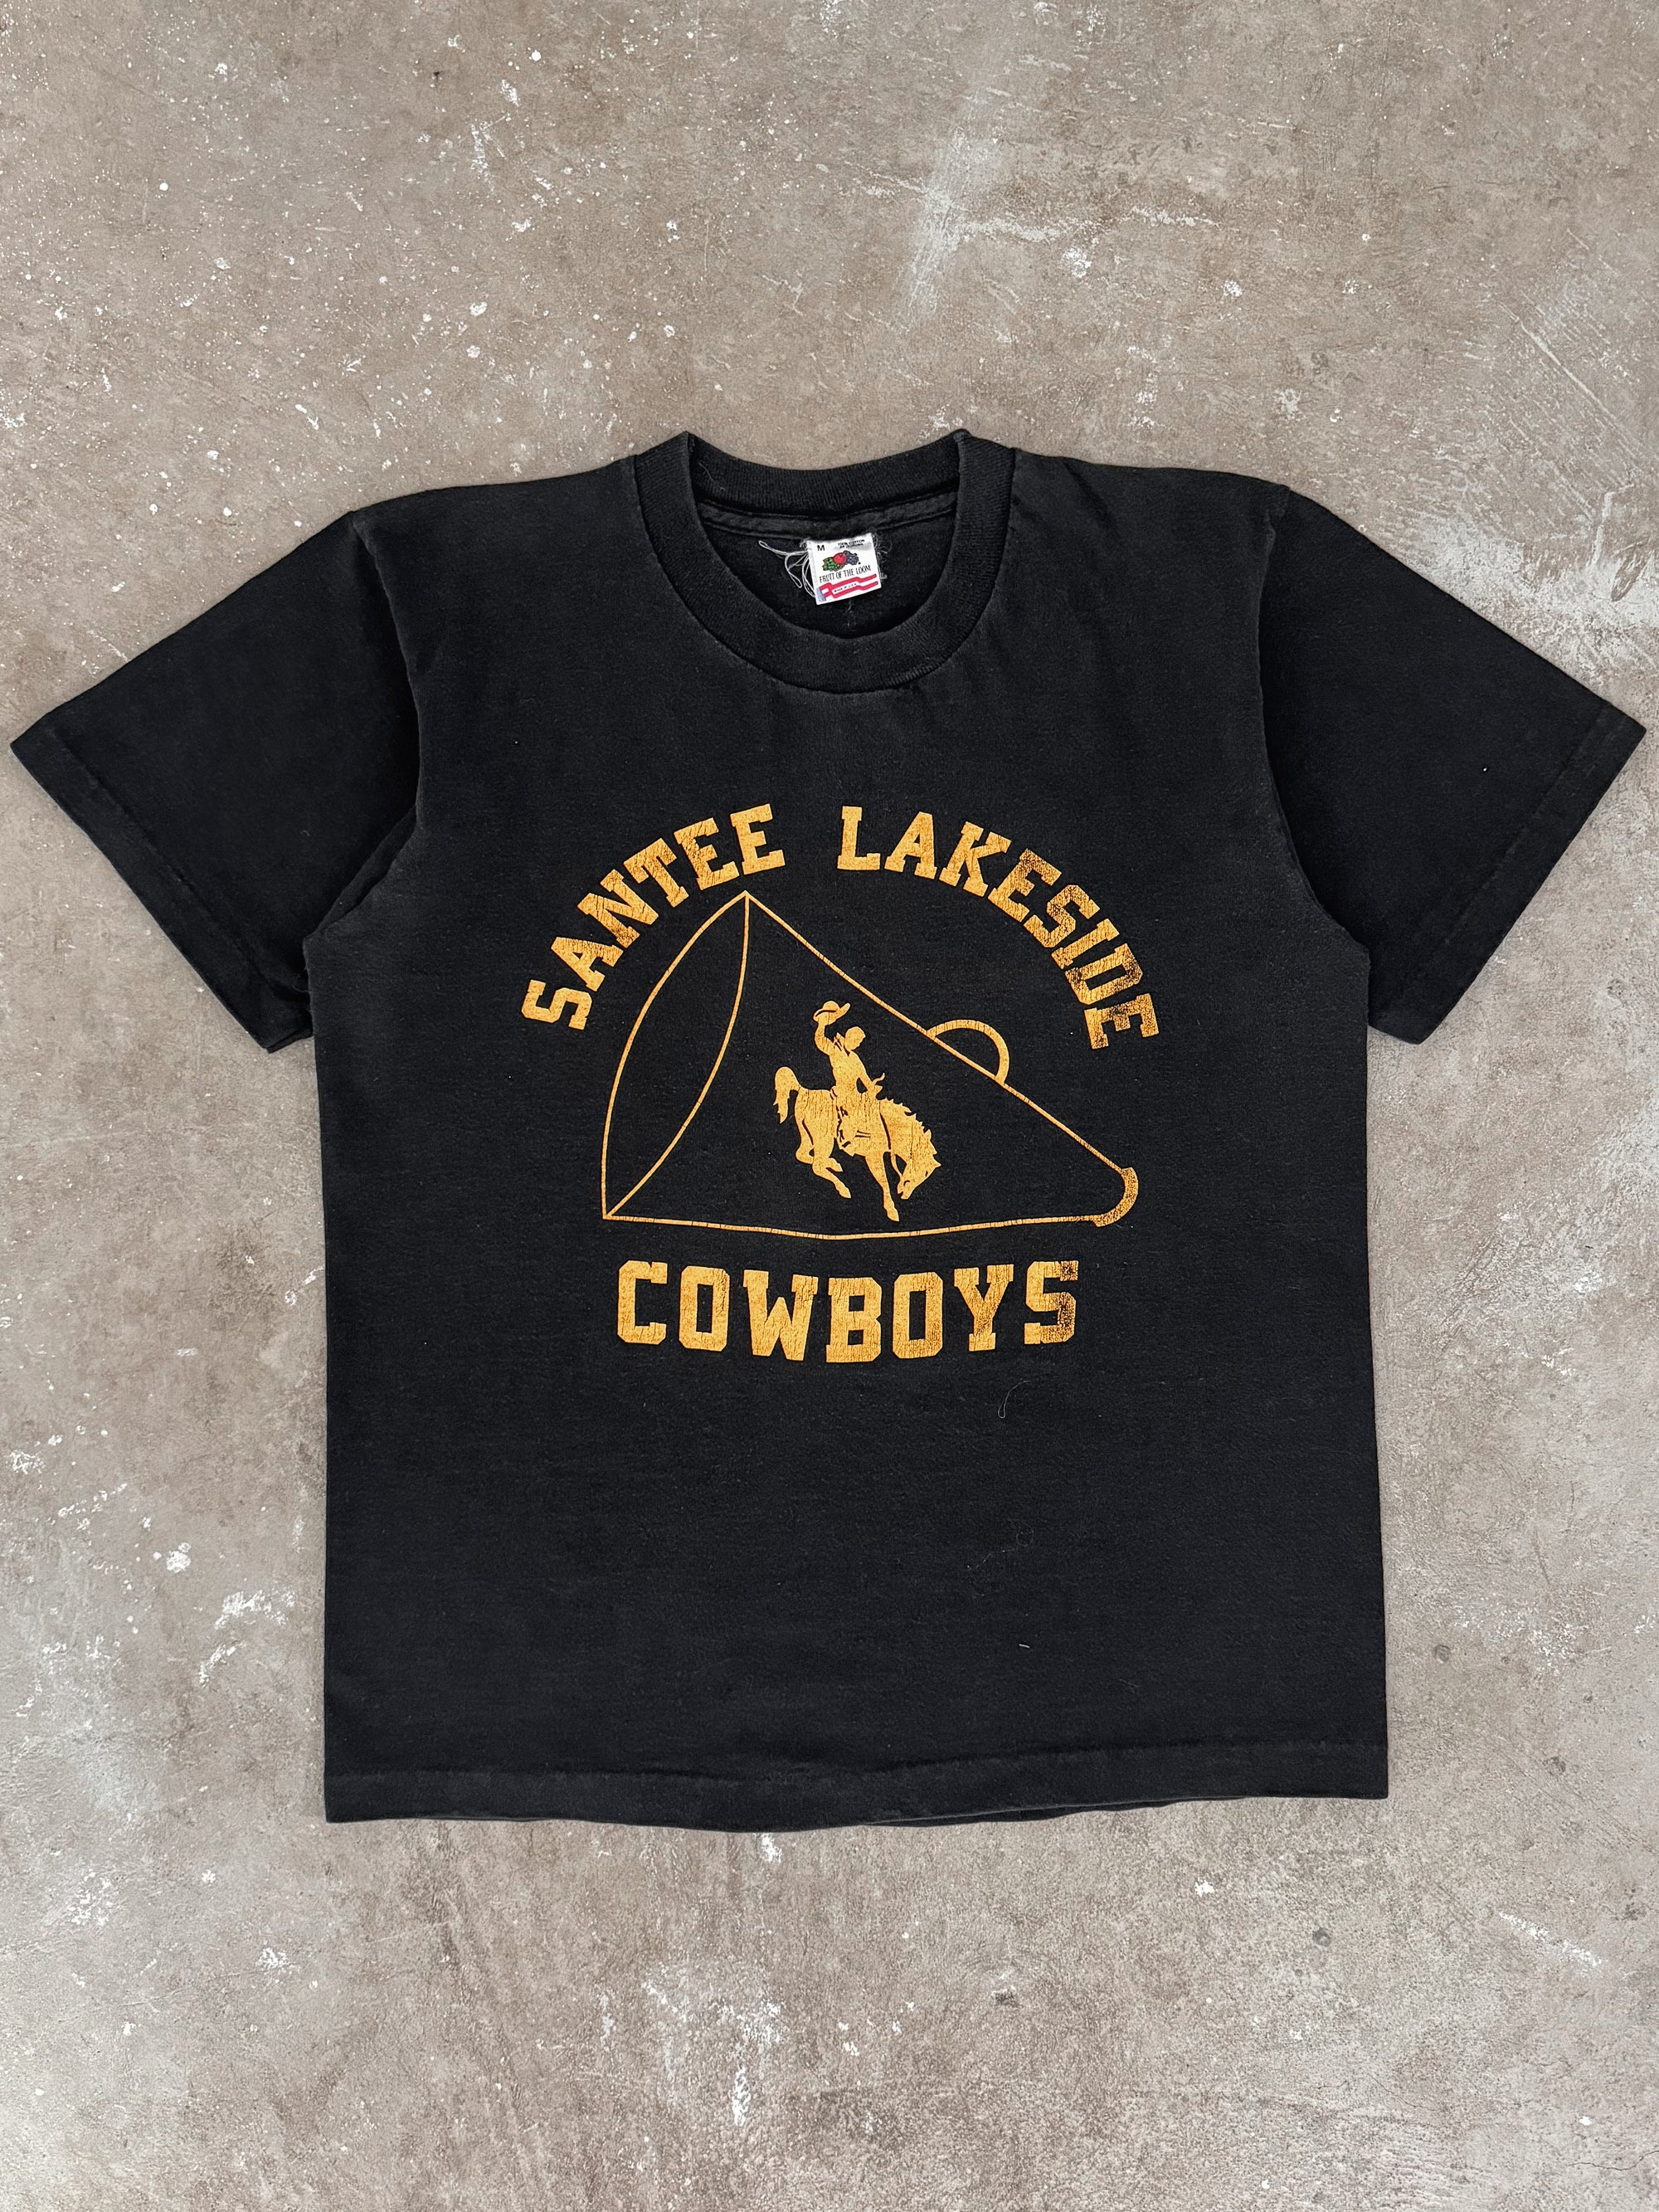 1990s “Santee Lakeside Cowboys” Single Stitched Tee (S/M)